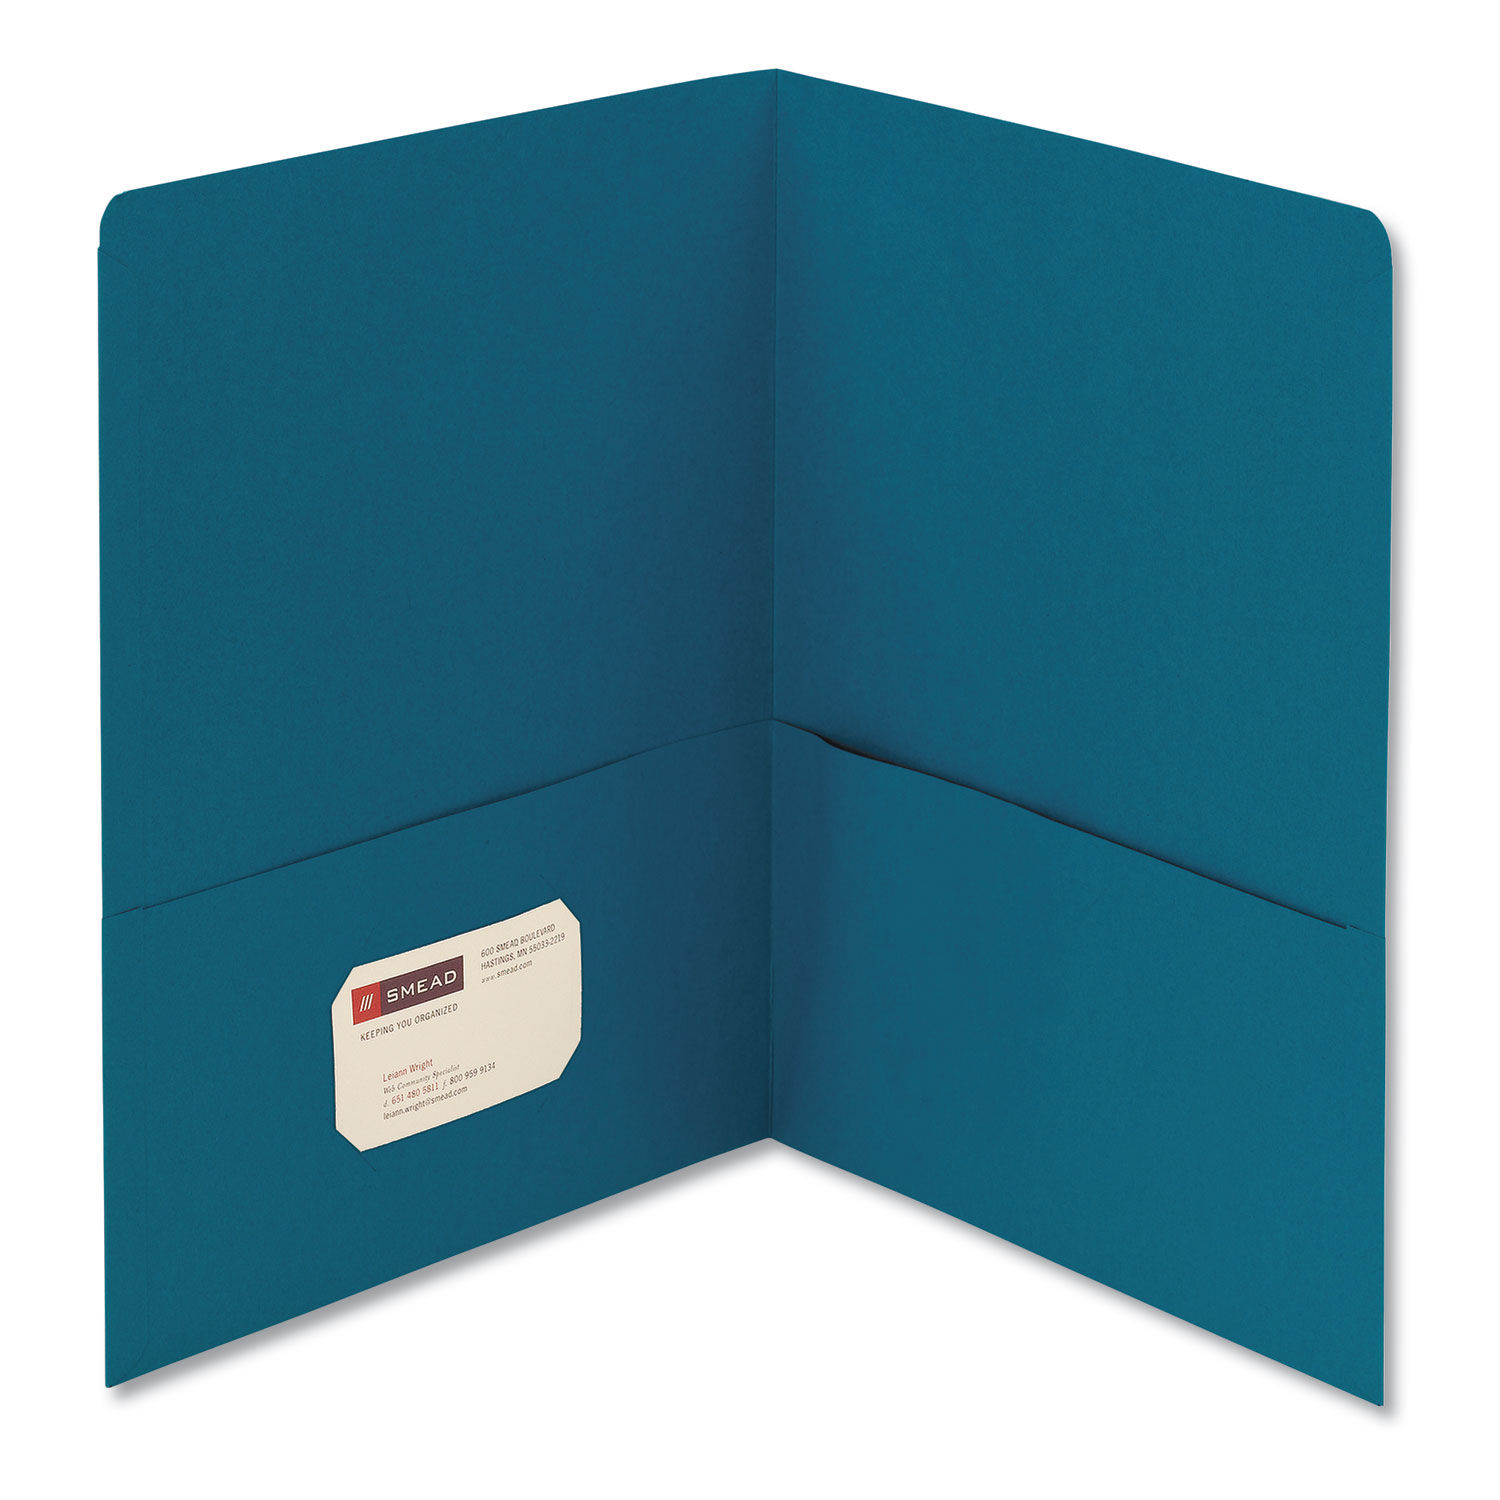 Two-Pocket Folder Textured Paper, 100-Sheet Capacity, 11 x 8.5, Teal, 25/Box